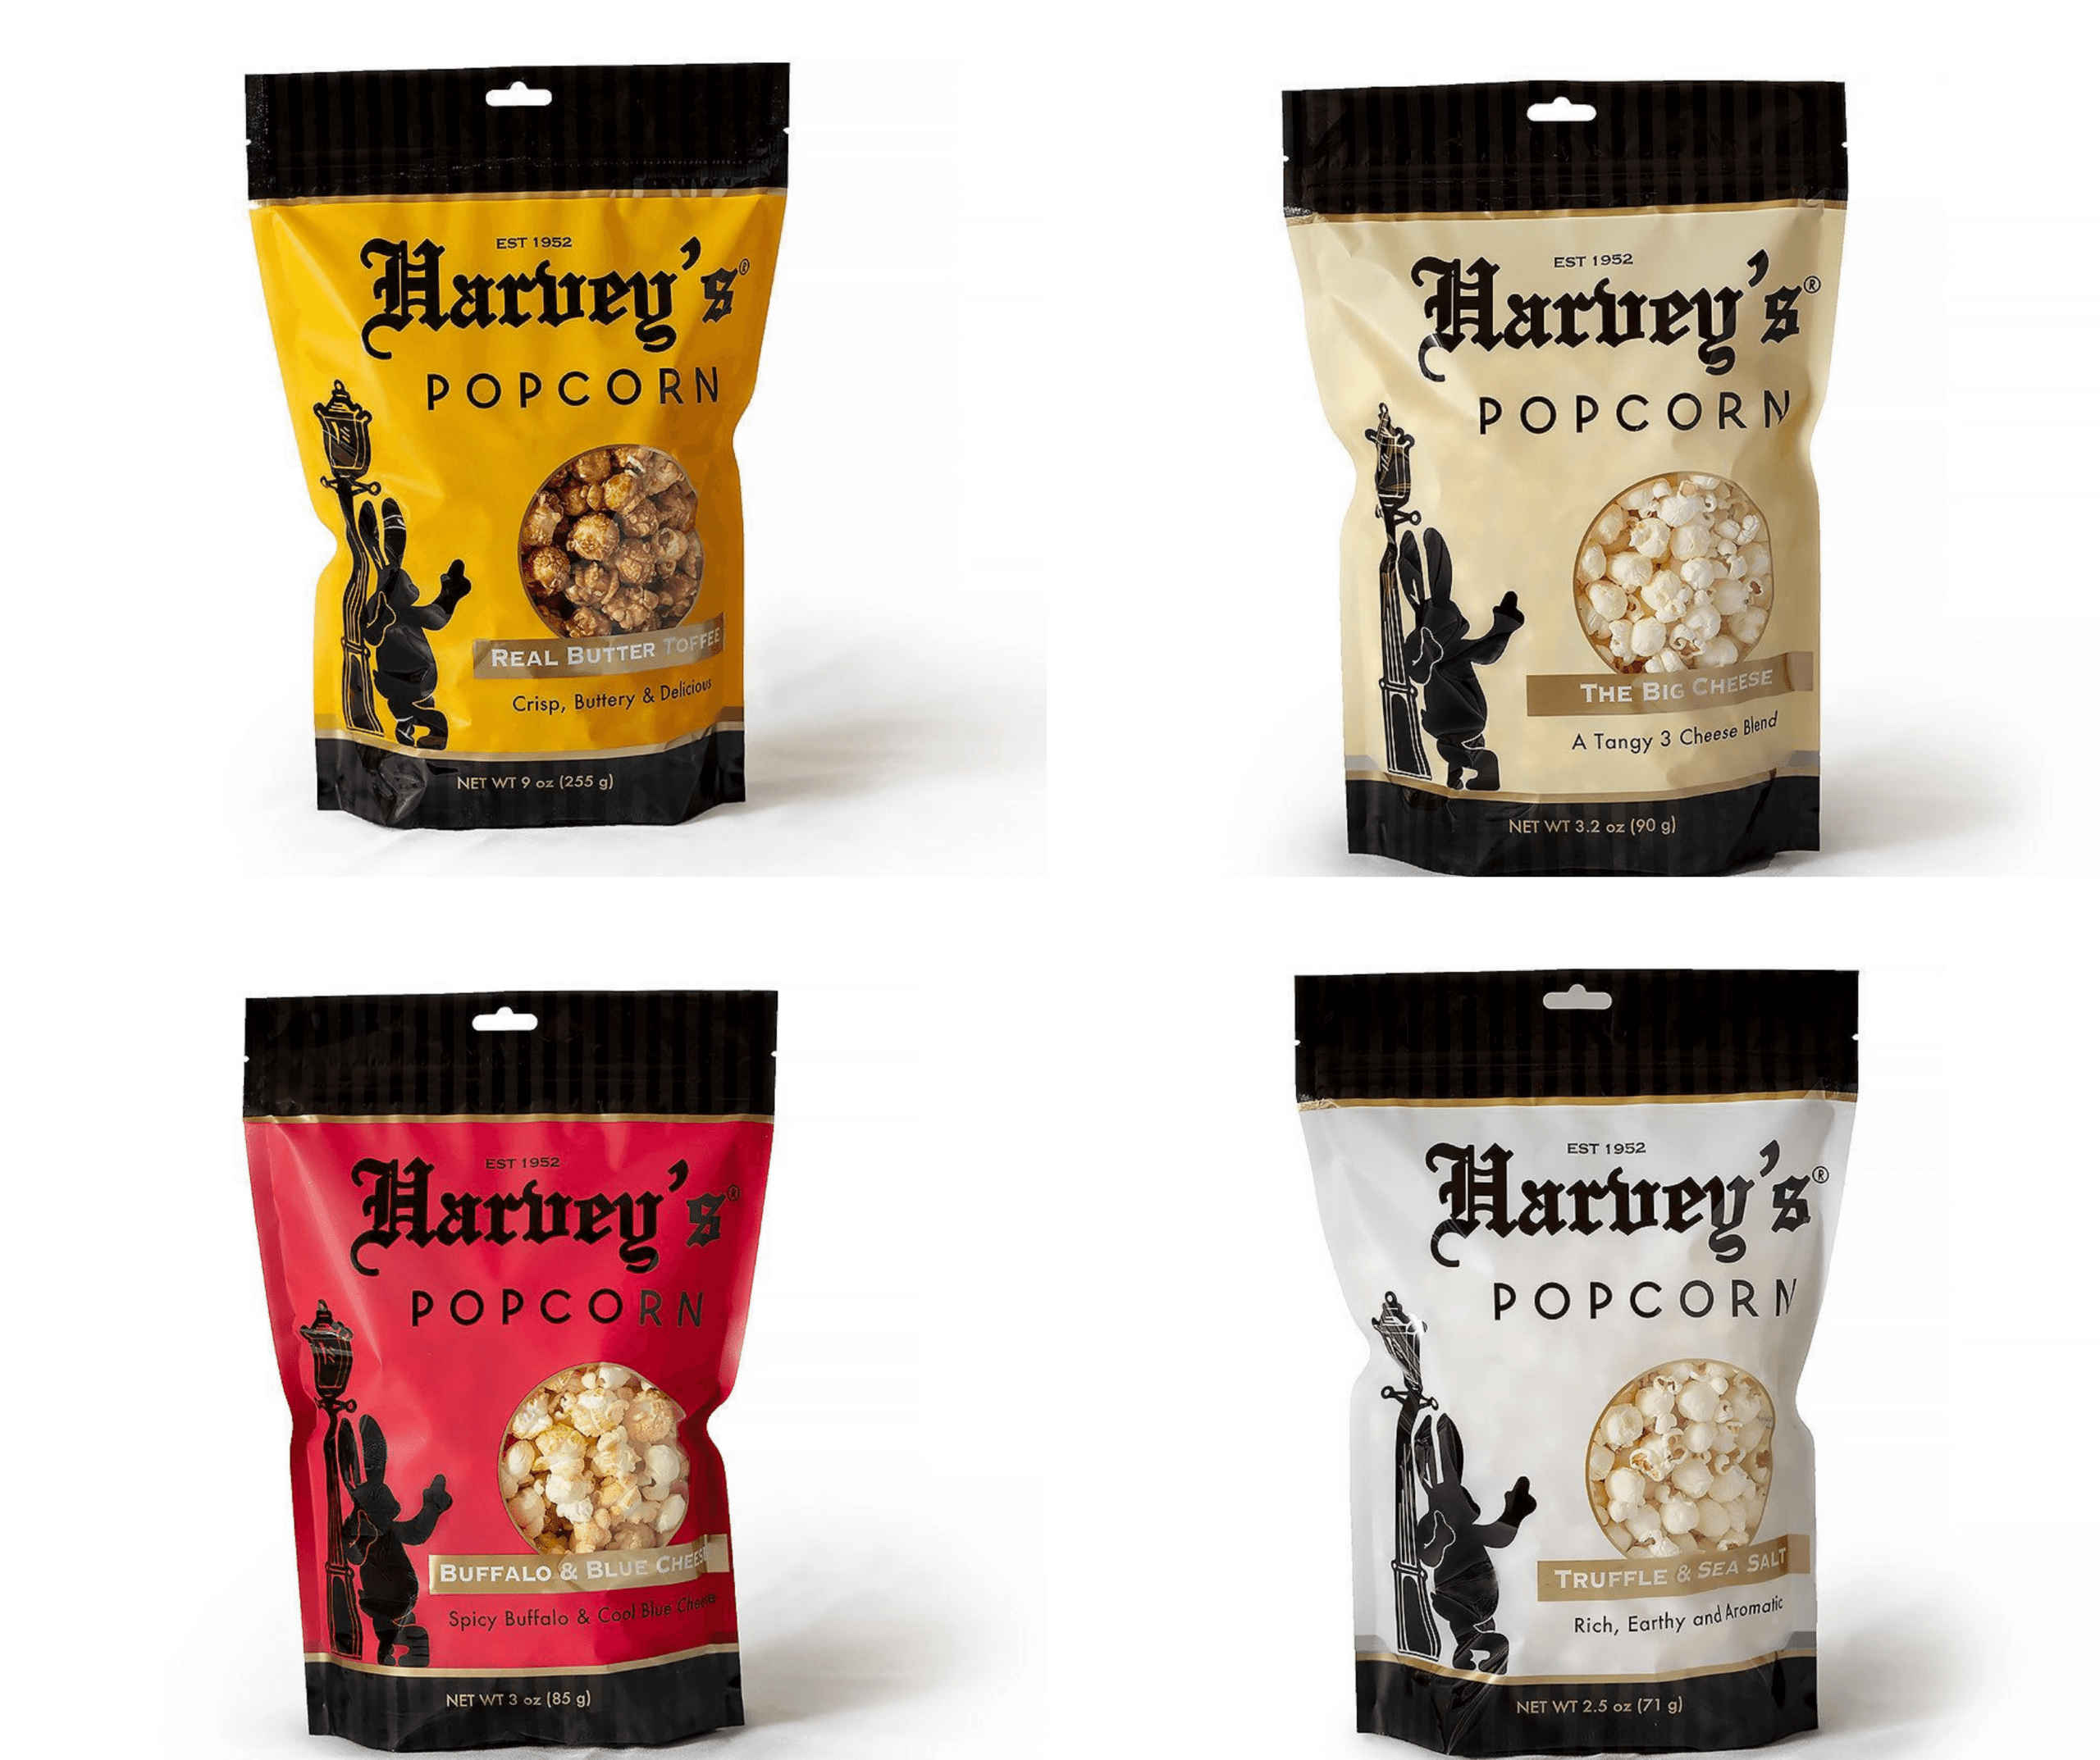 Harvey's Popcorn